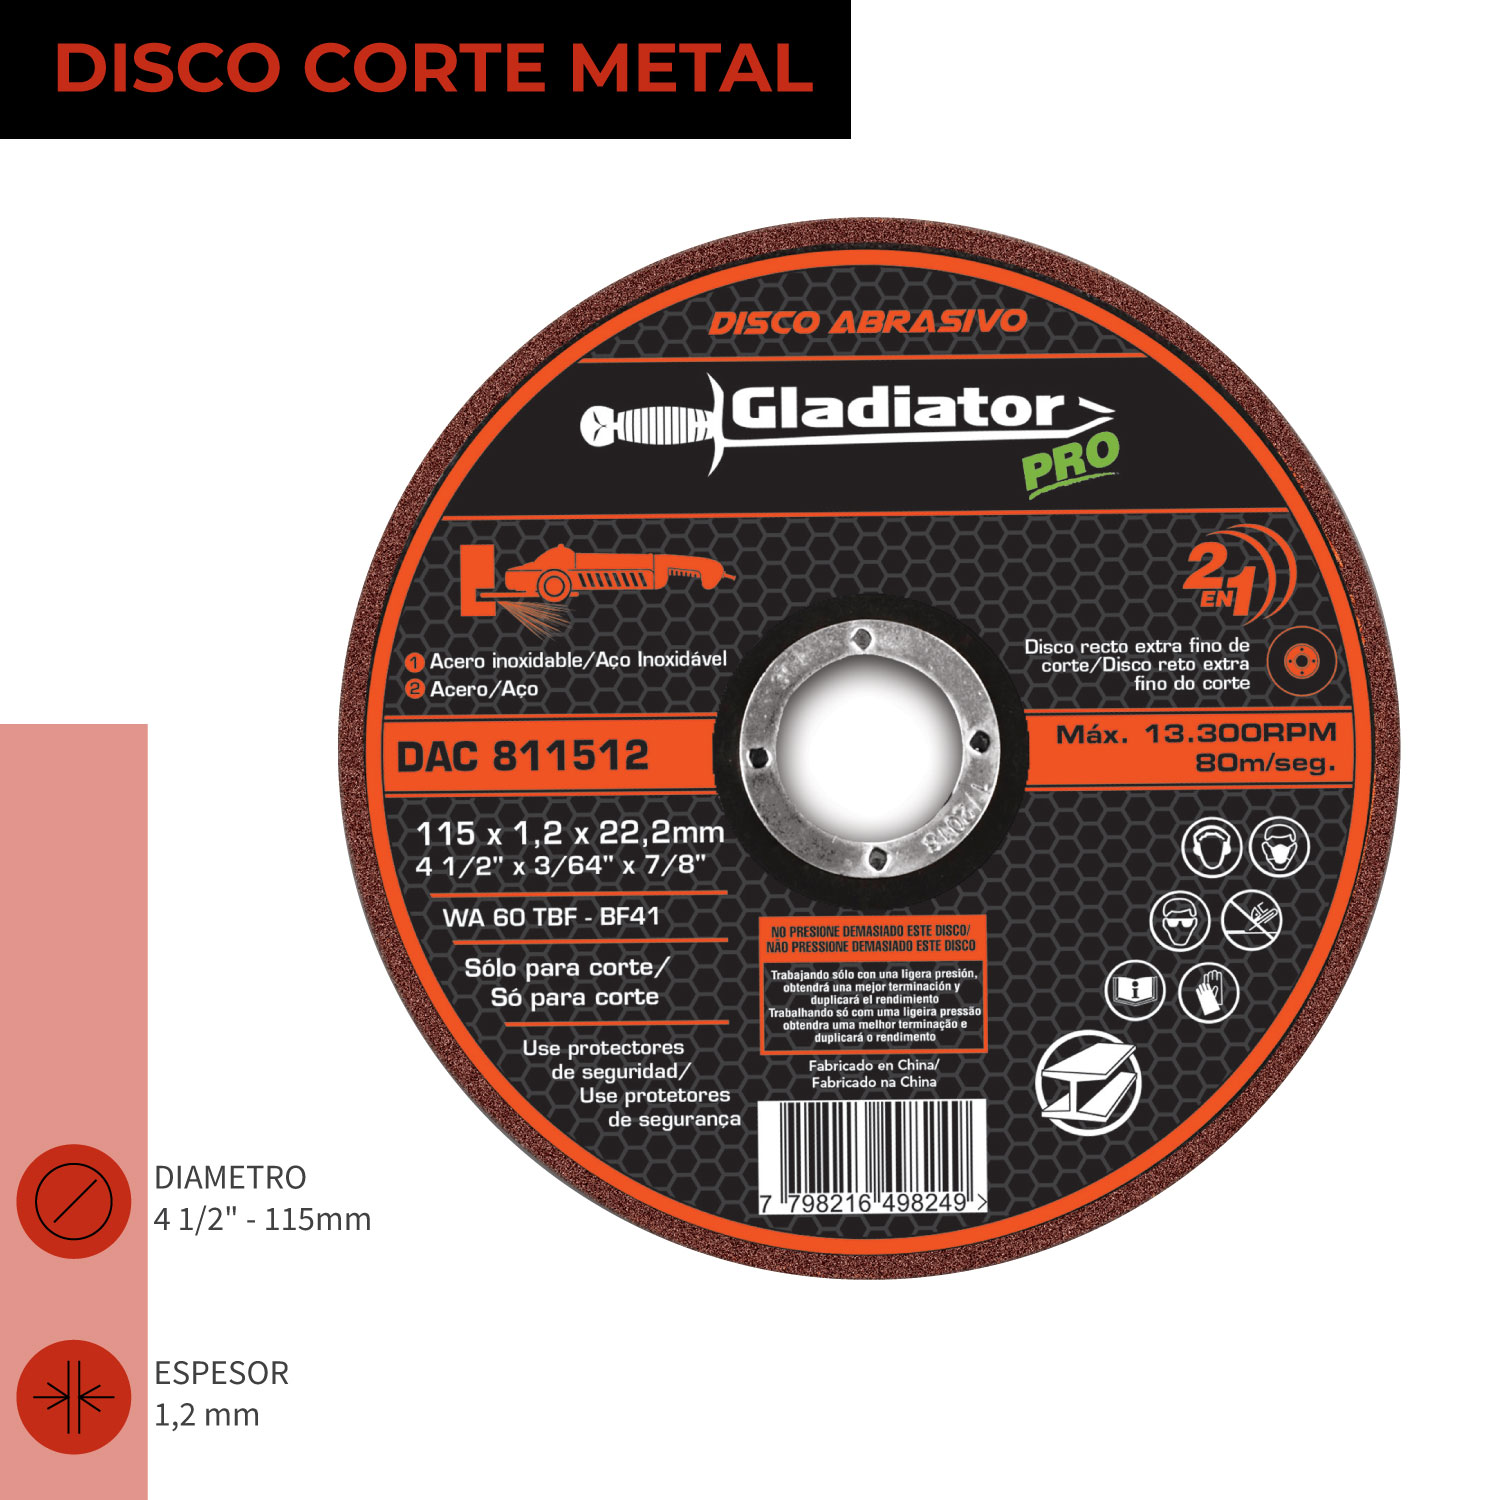 Disco corte 4 1/2' x 1.2mm metal/inox dac 811512